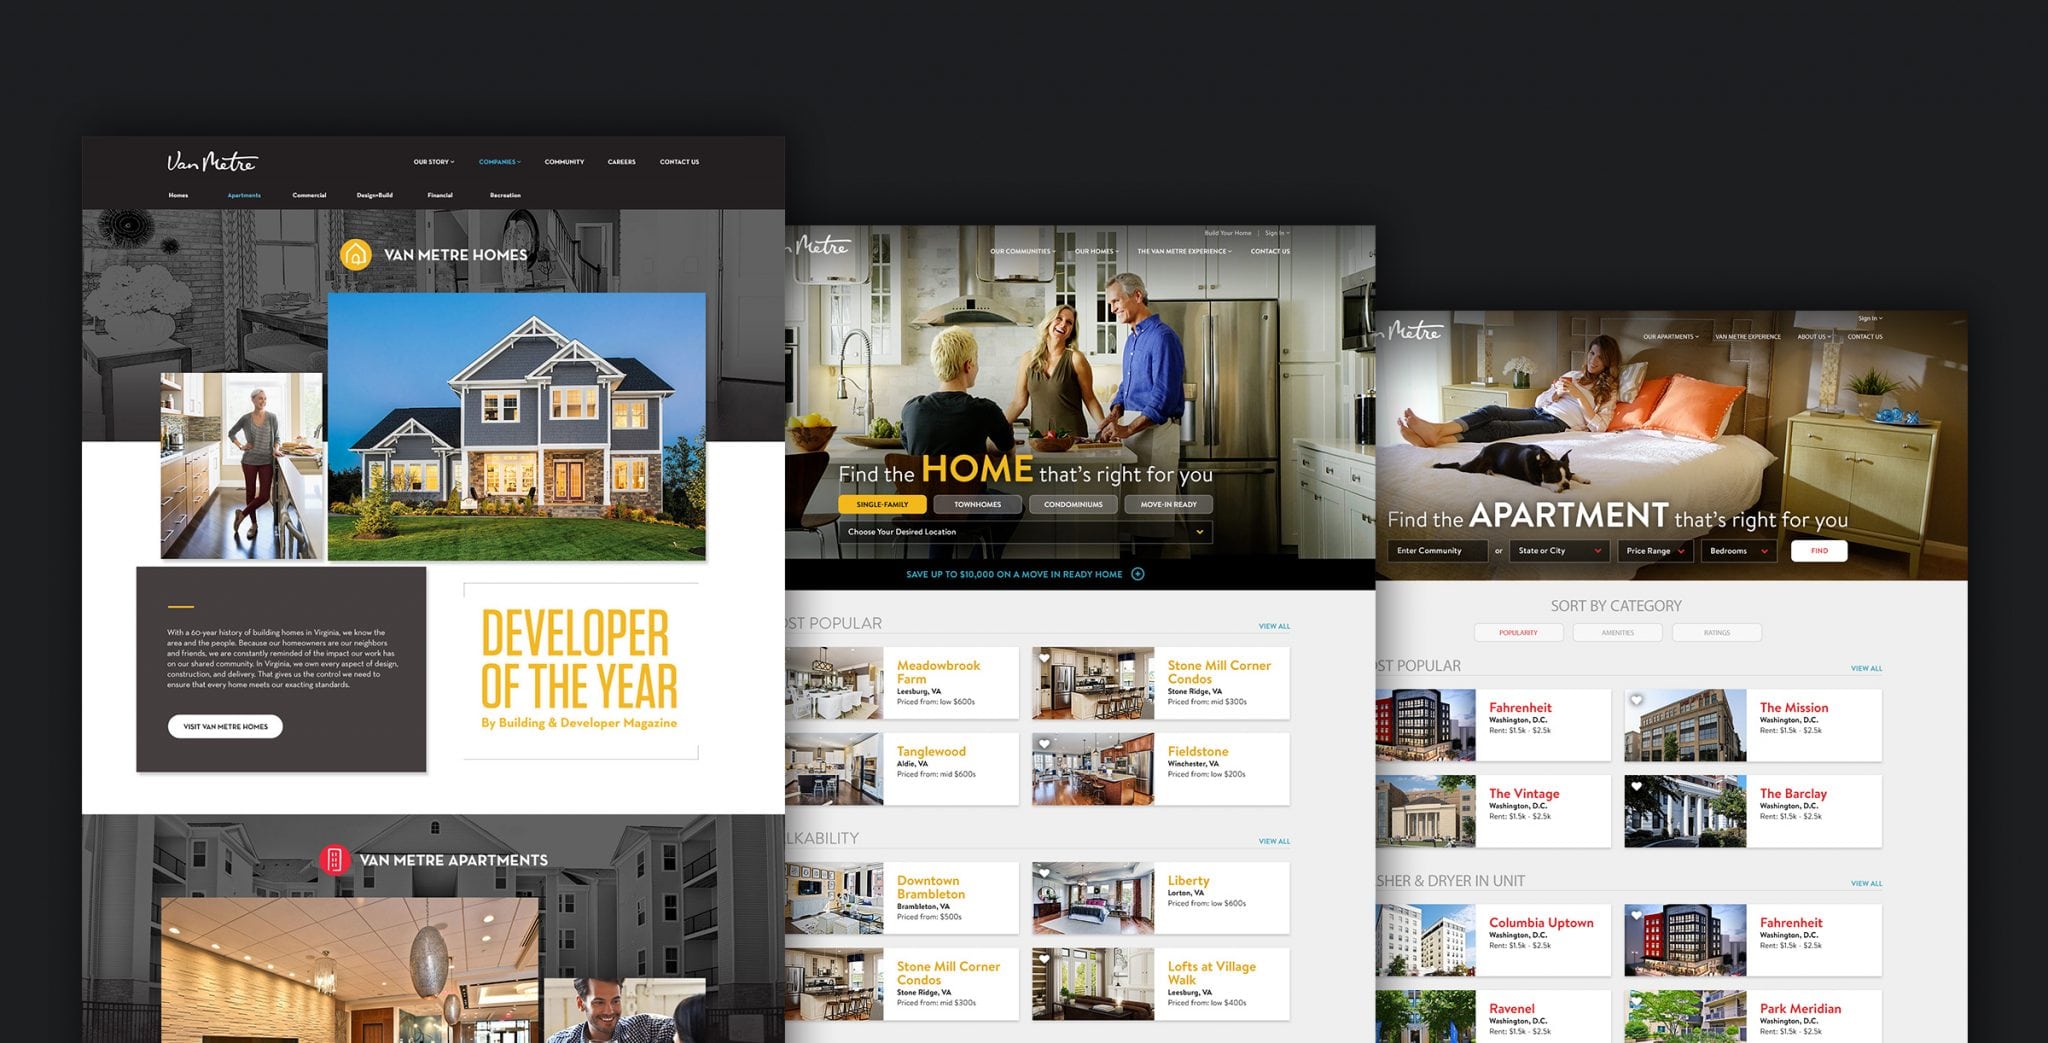 Different Van Metre webpages highlighting various apartment listings